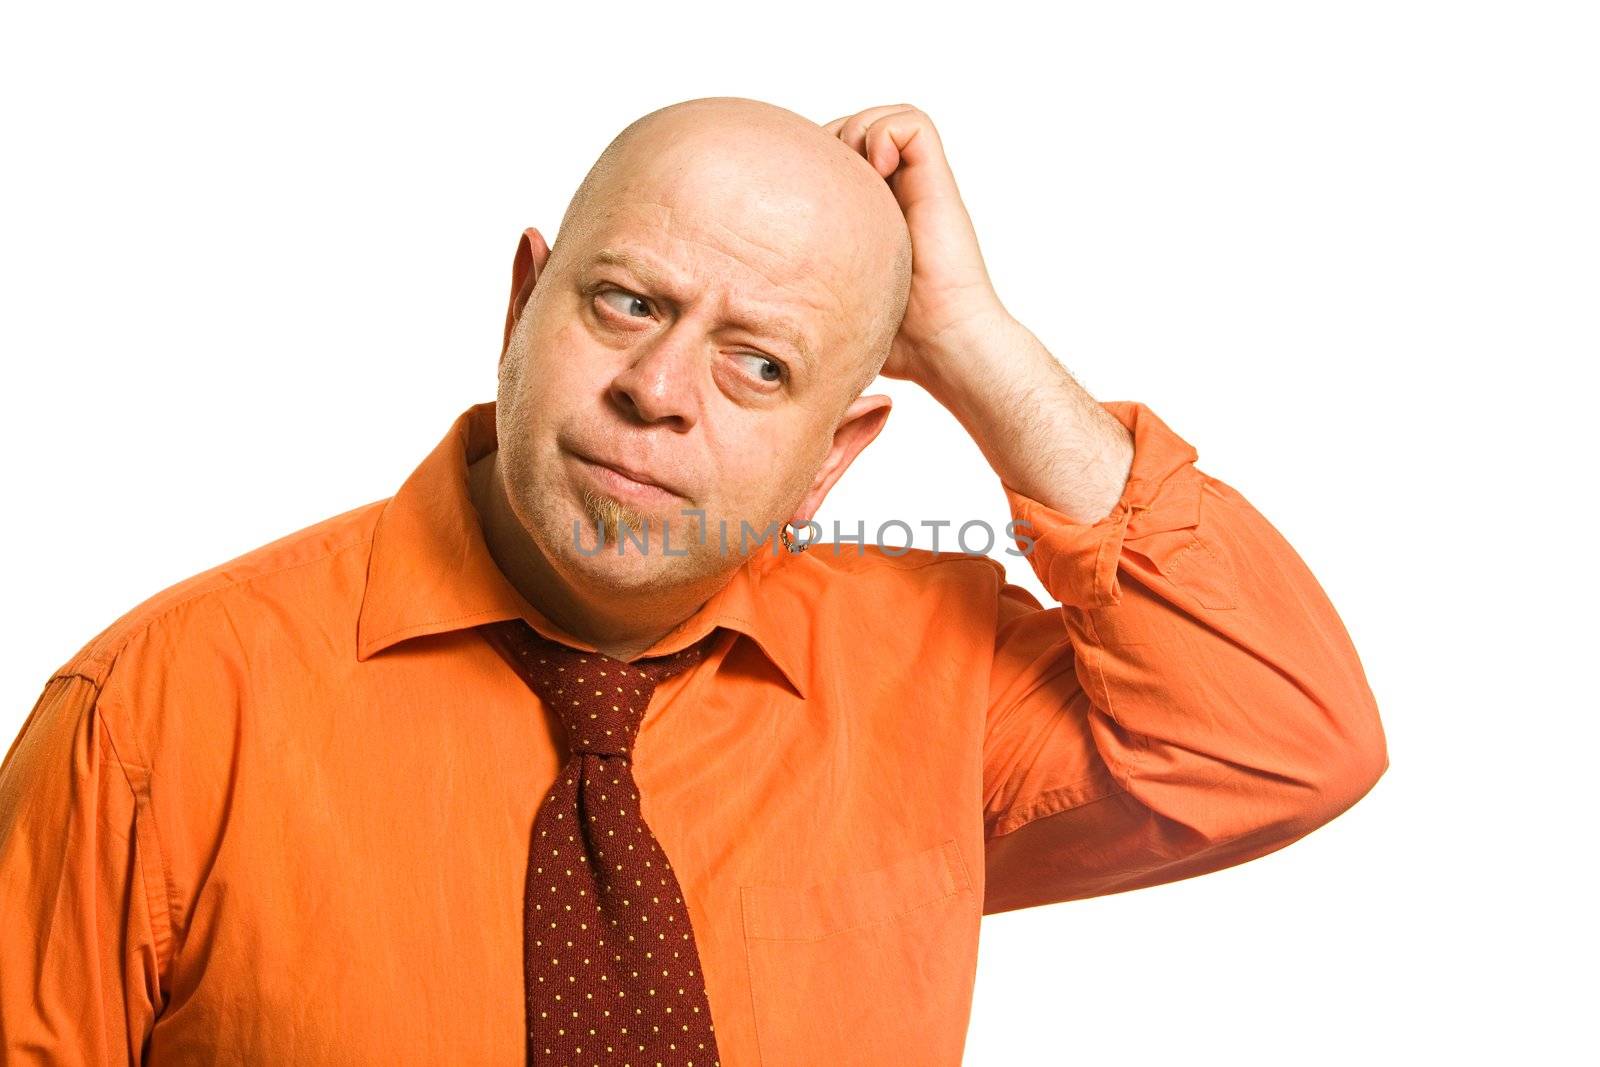  Bald man in an orange shirt  on a white background 
